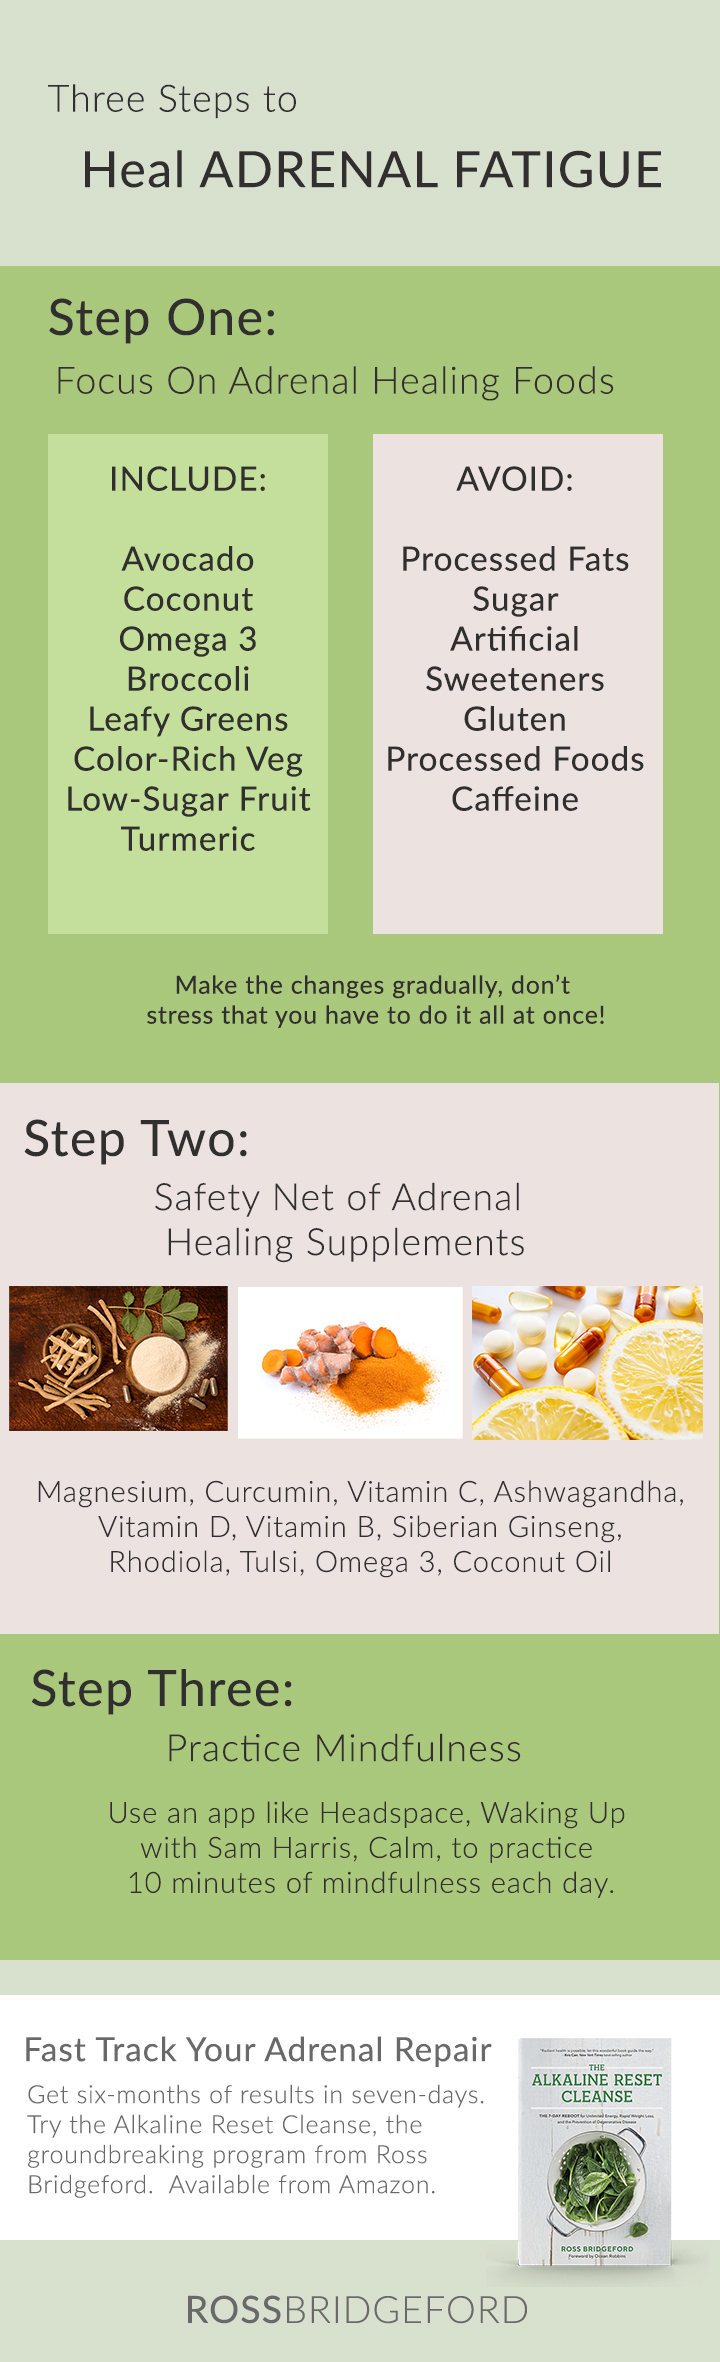 foods for adrenal fatigue - diet plan